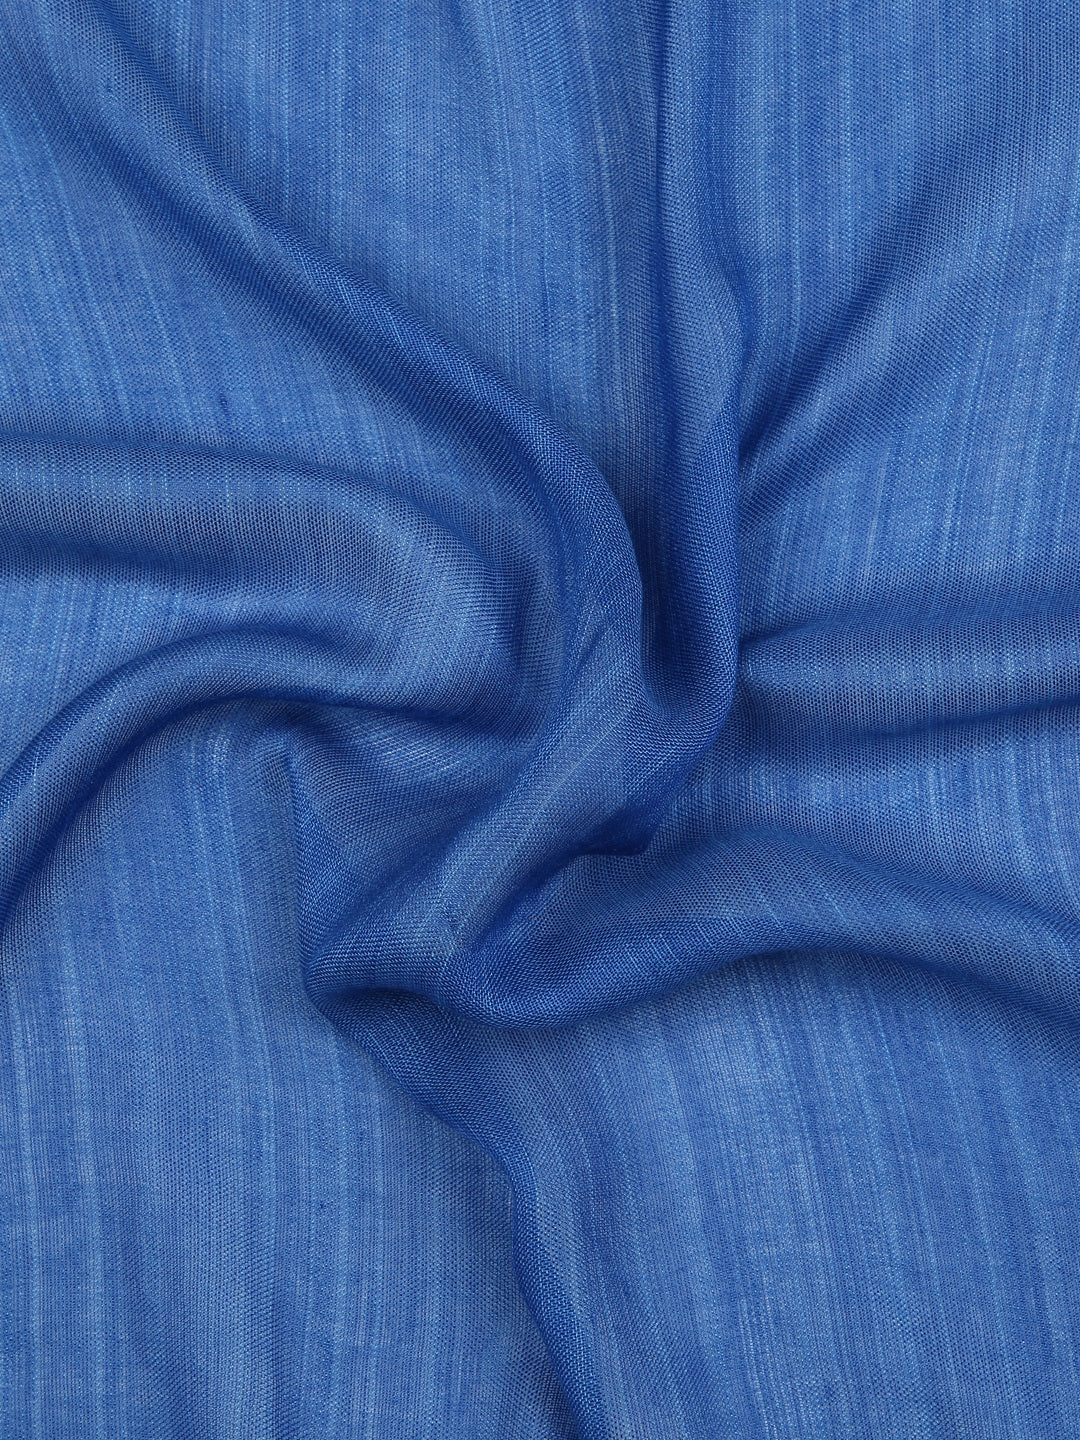 Blue Textured Stole